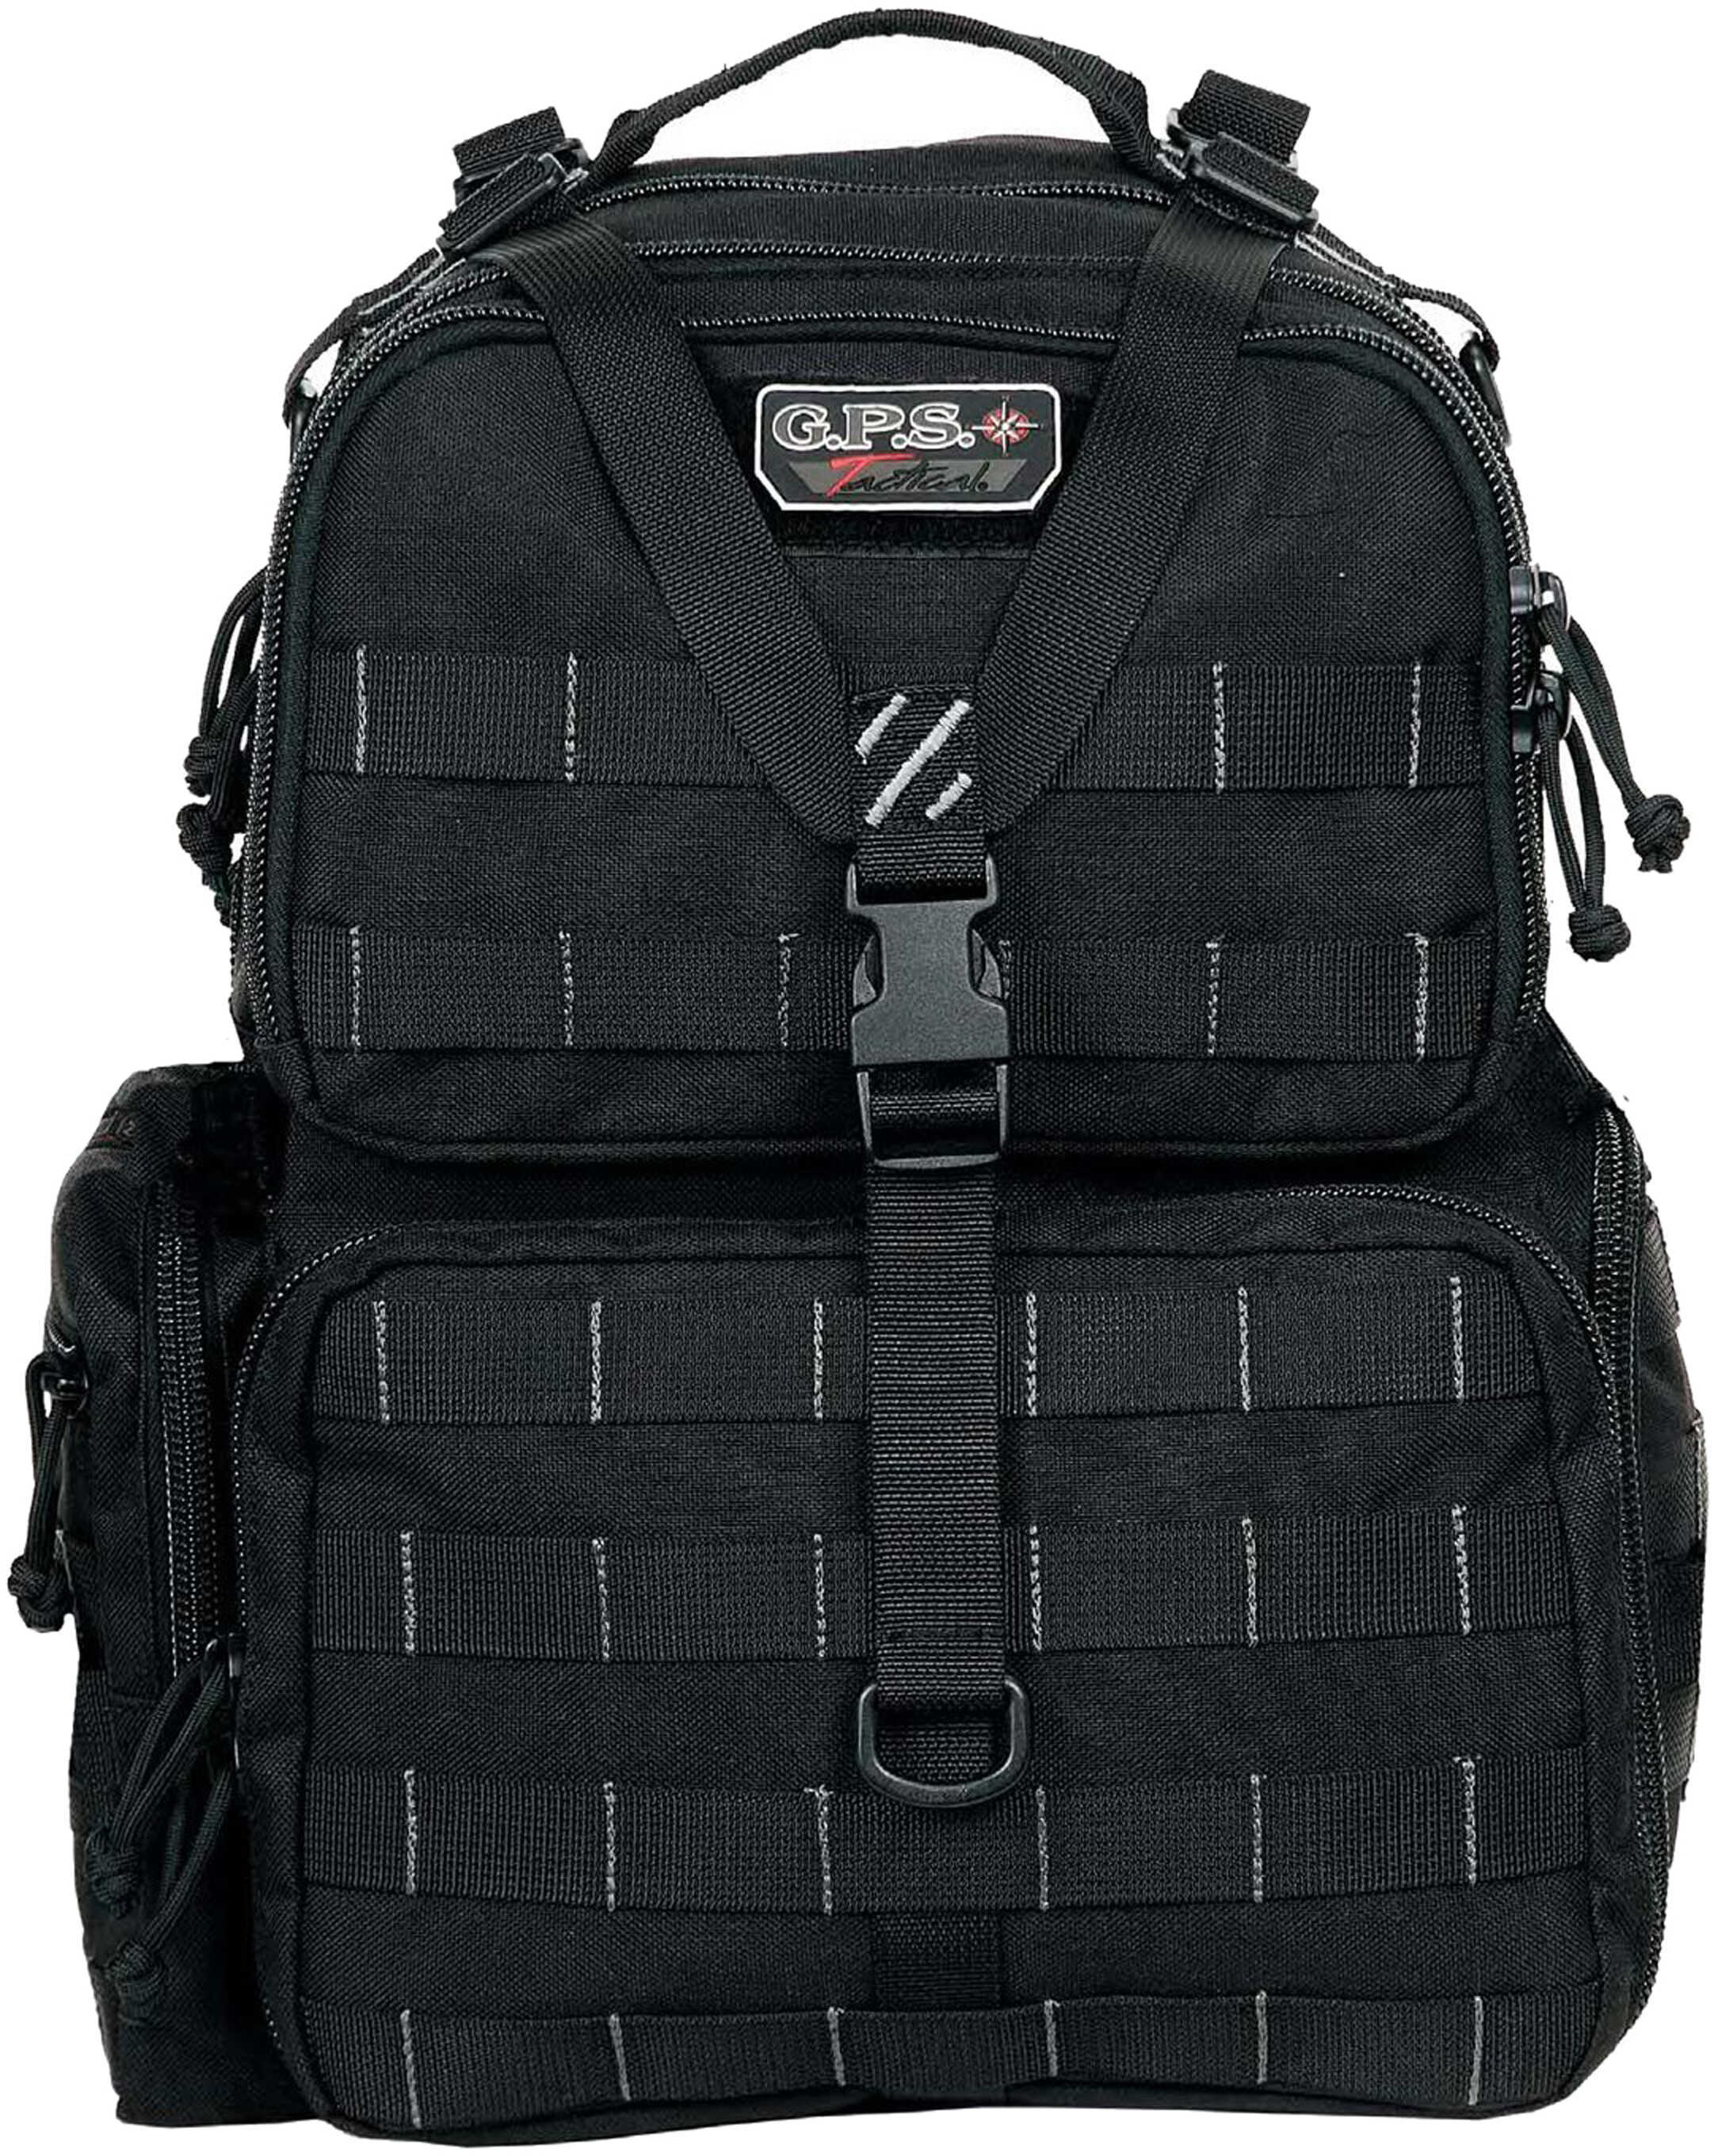 G-Outdoors Inc. Tactical Backpack Black Soft 3 Internal Pistol Cases GPS-T1612BPB